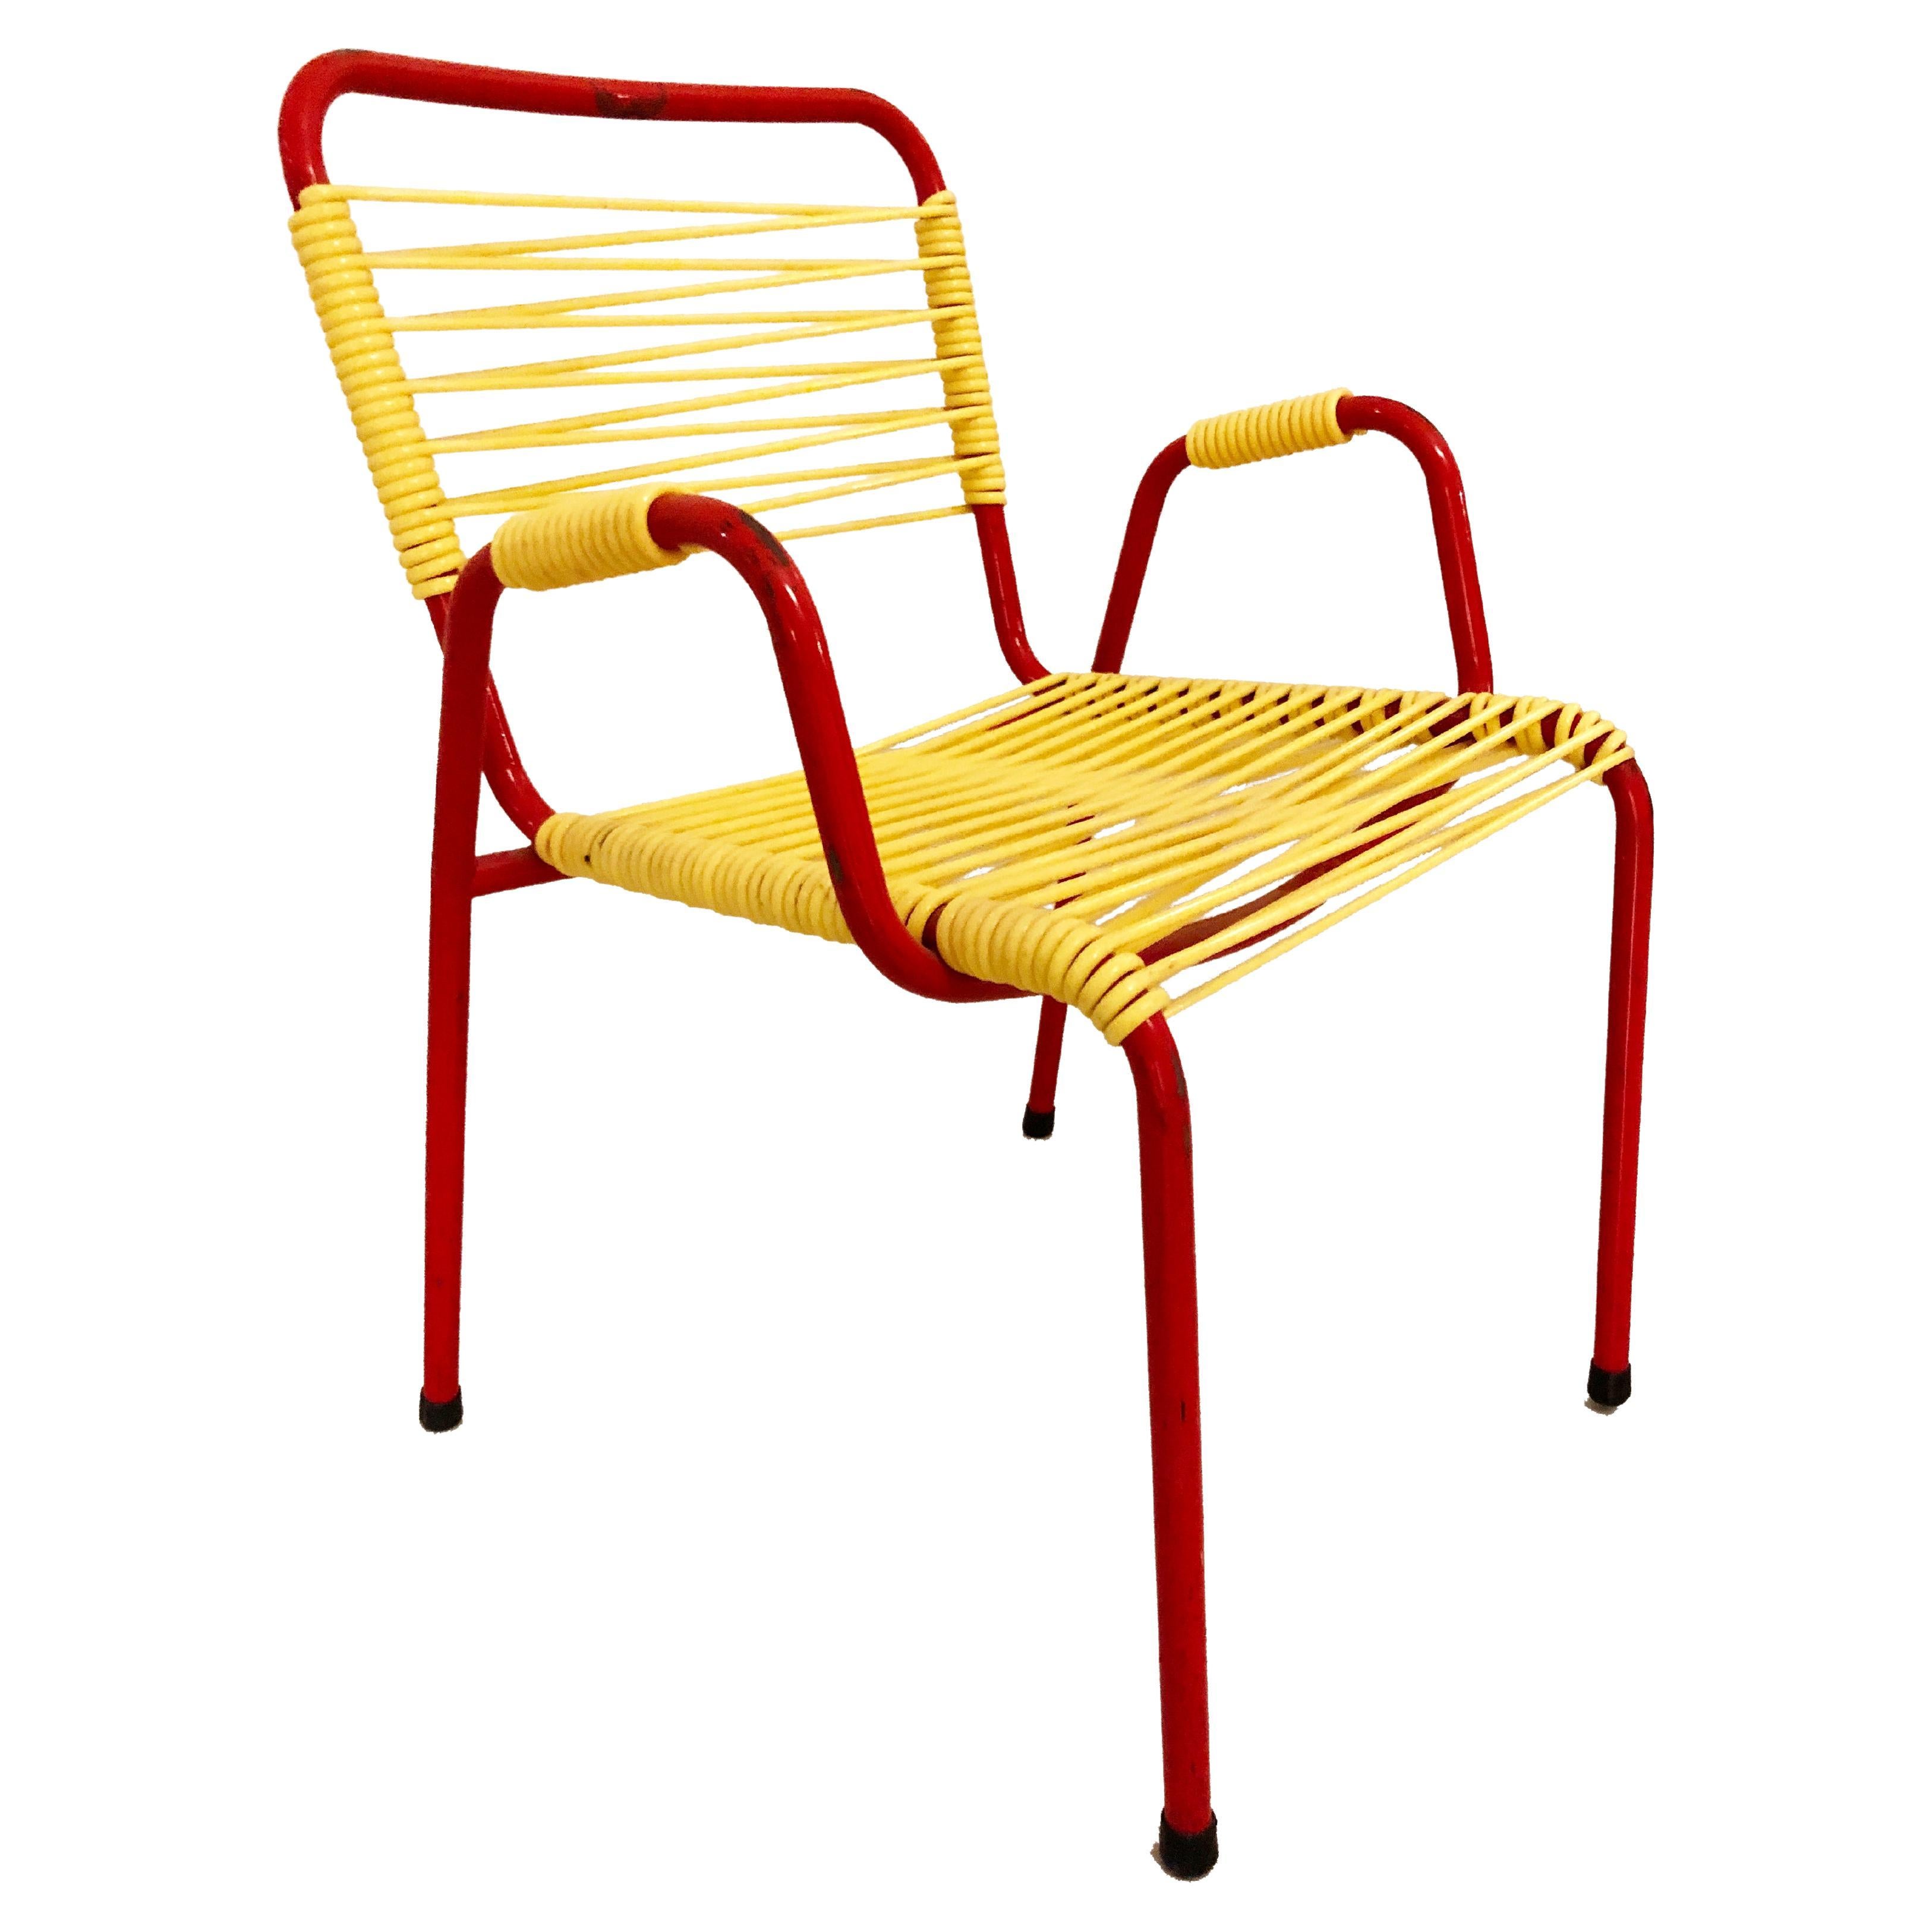 Children's chair scoubidou Torck - 1950's